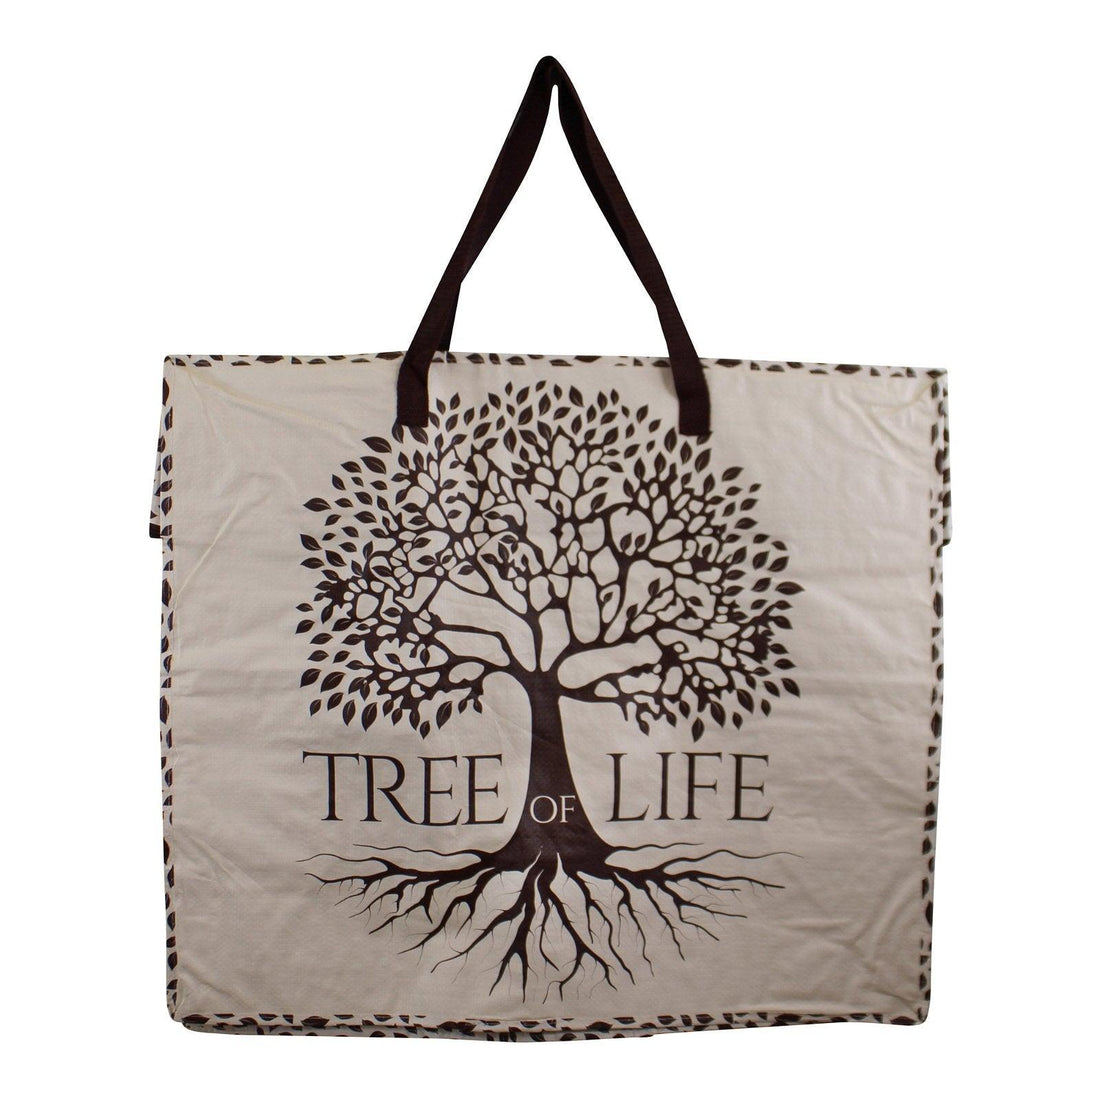 Extra Large Tree Of Life Shopper Bag, 65x55cm - £15.99 - Tree Of Life 